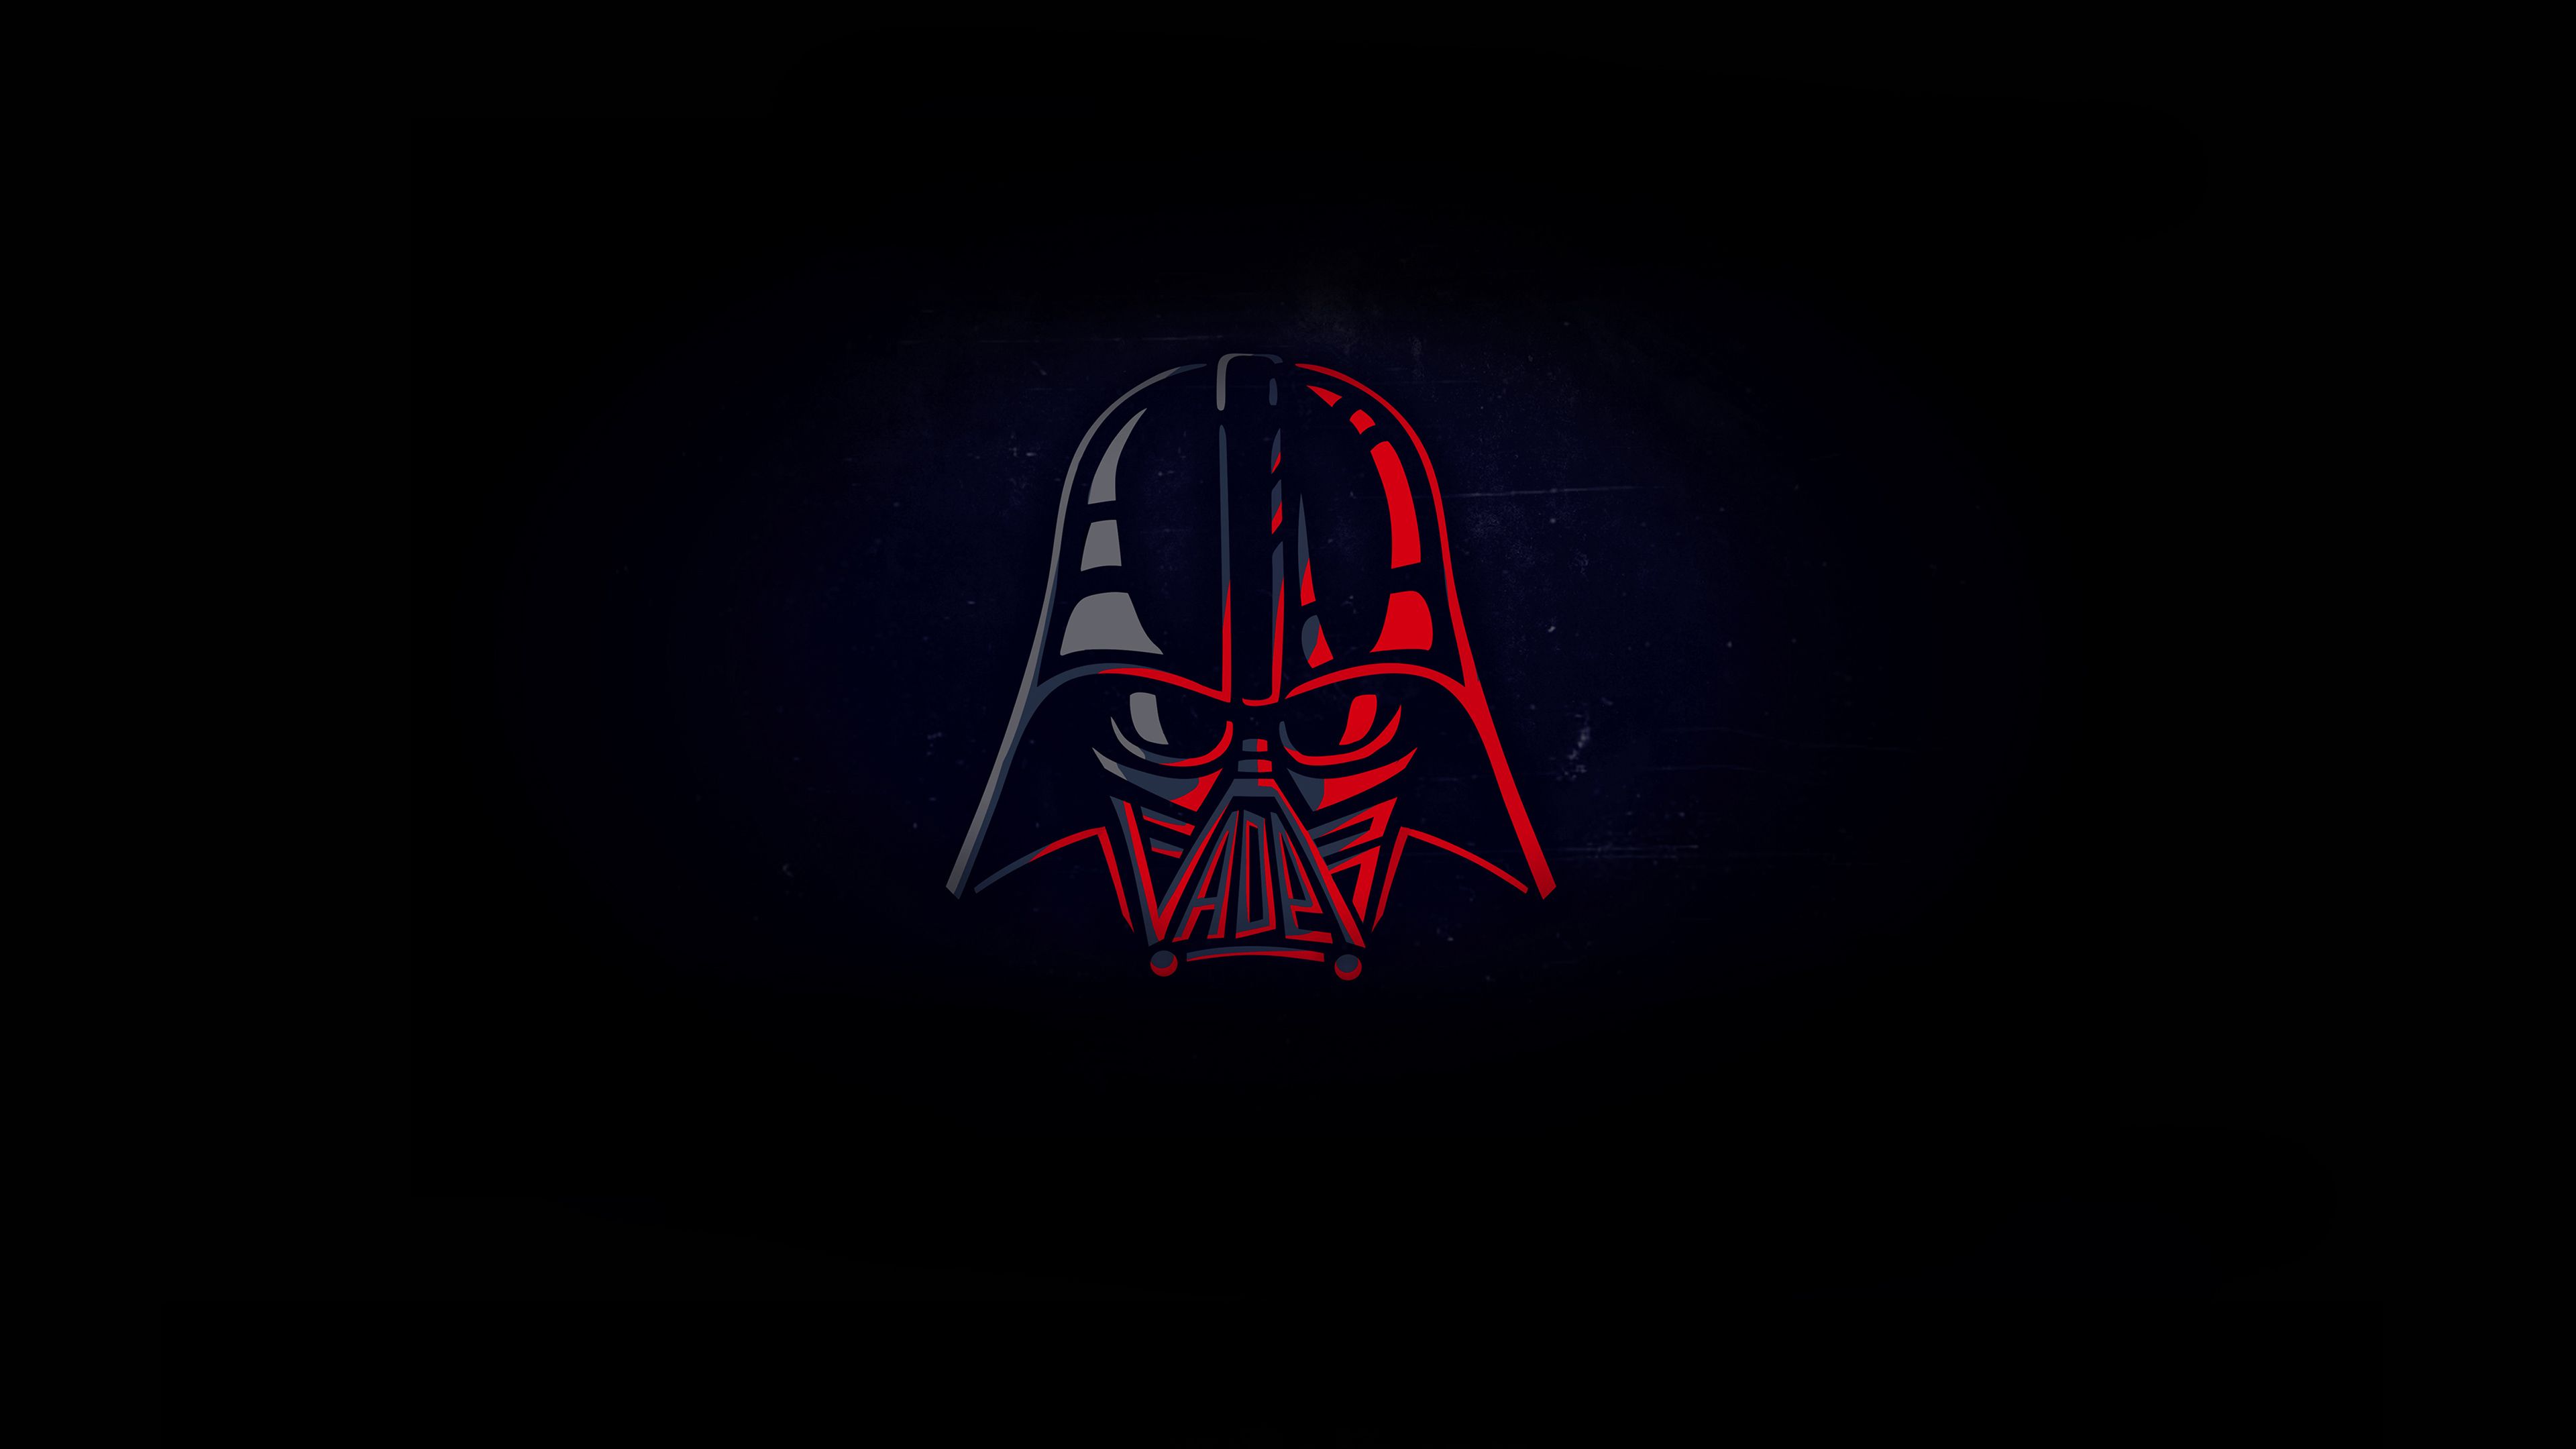 Darth Vader Minimal 4k Star Wars Wallpaper Minimalist